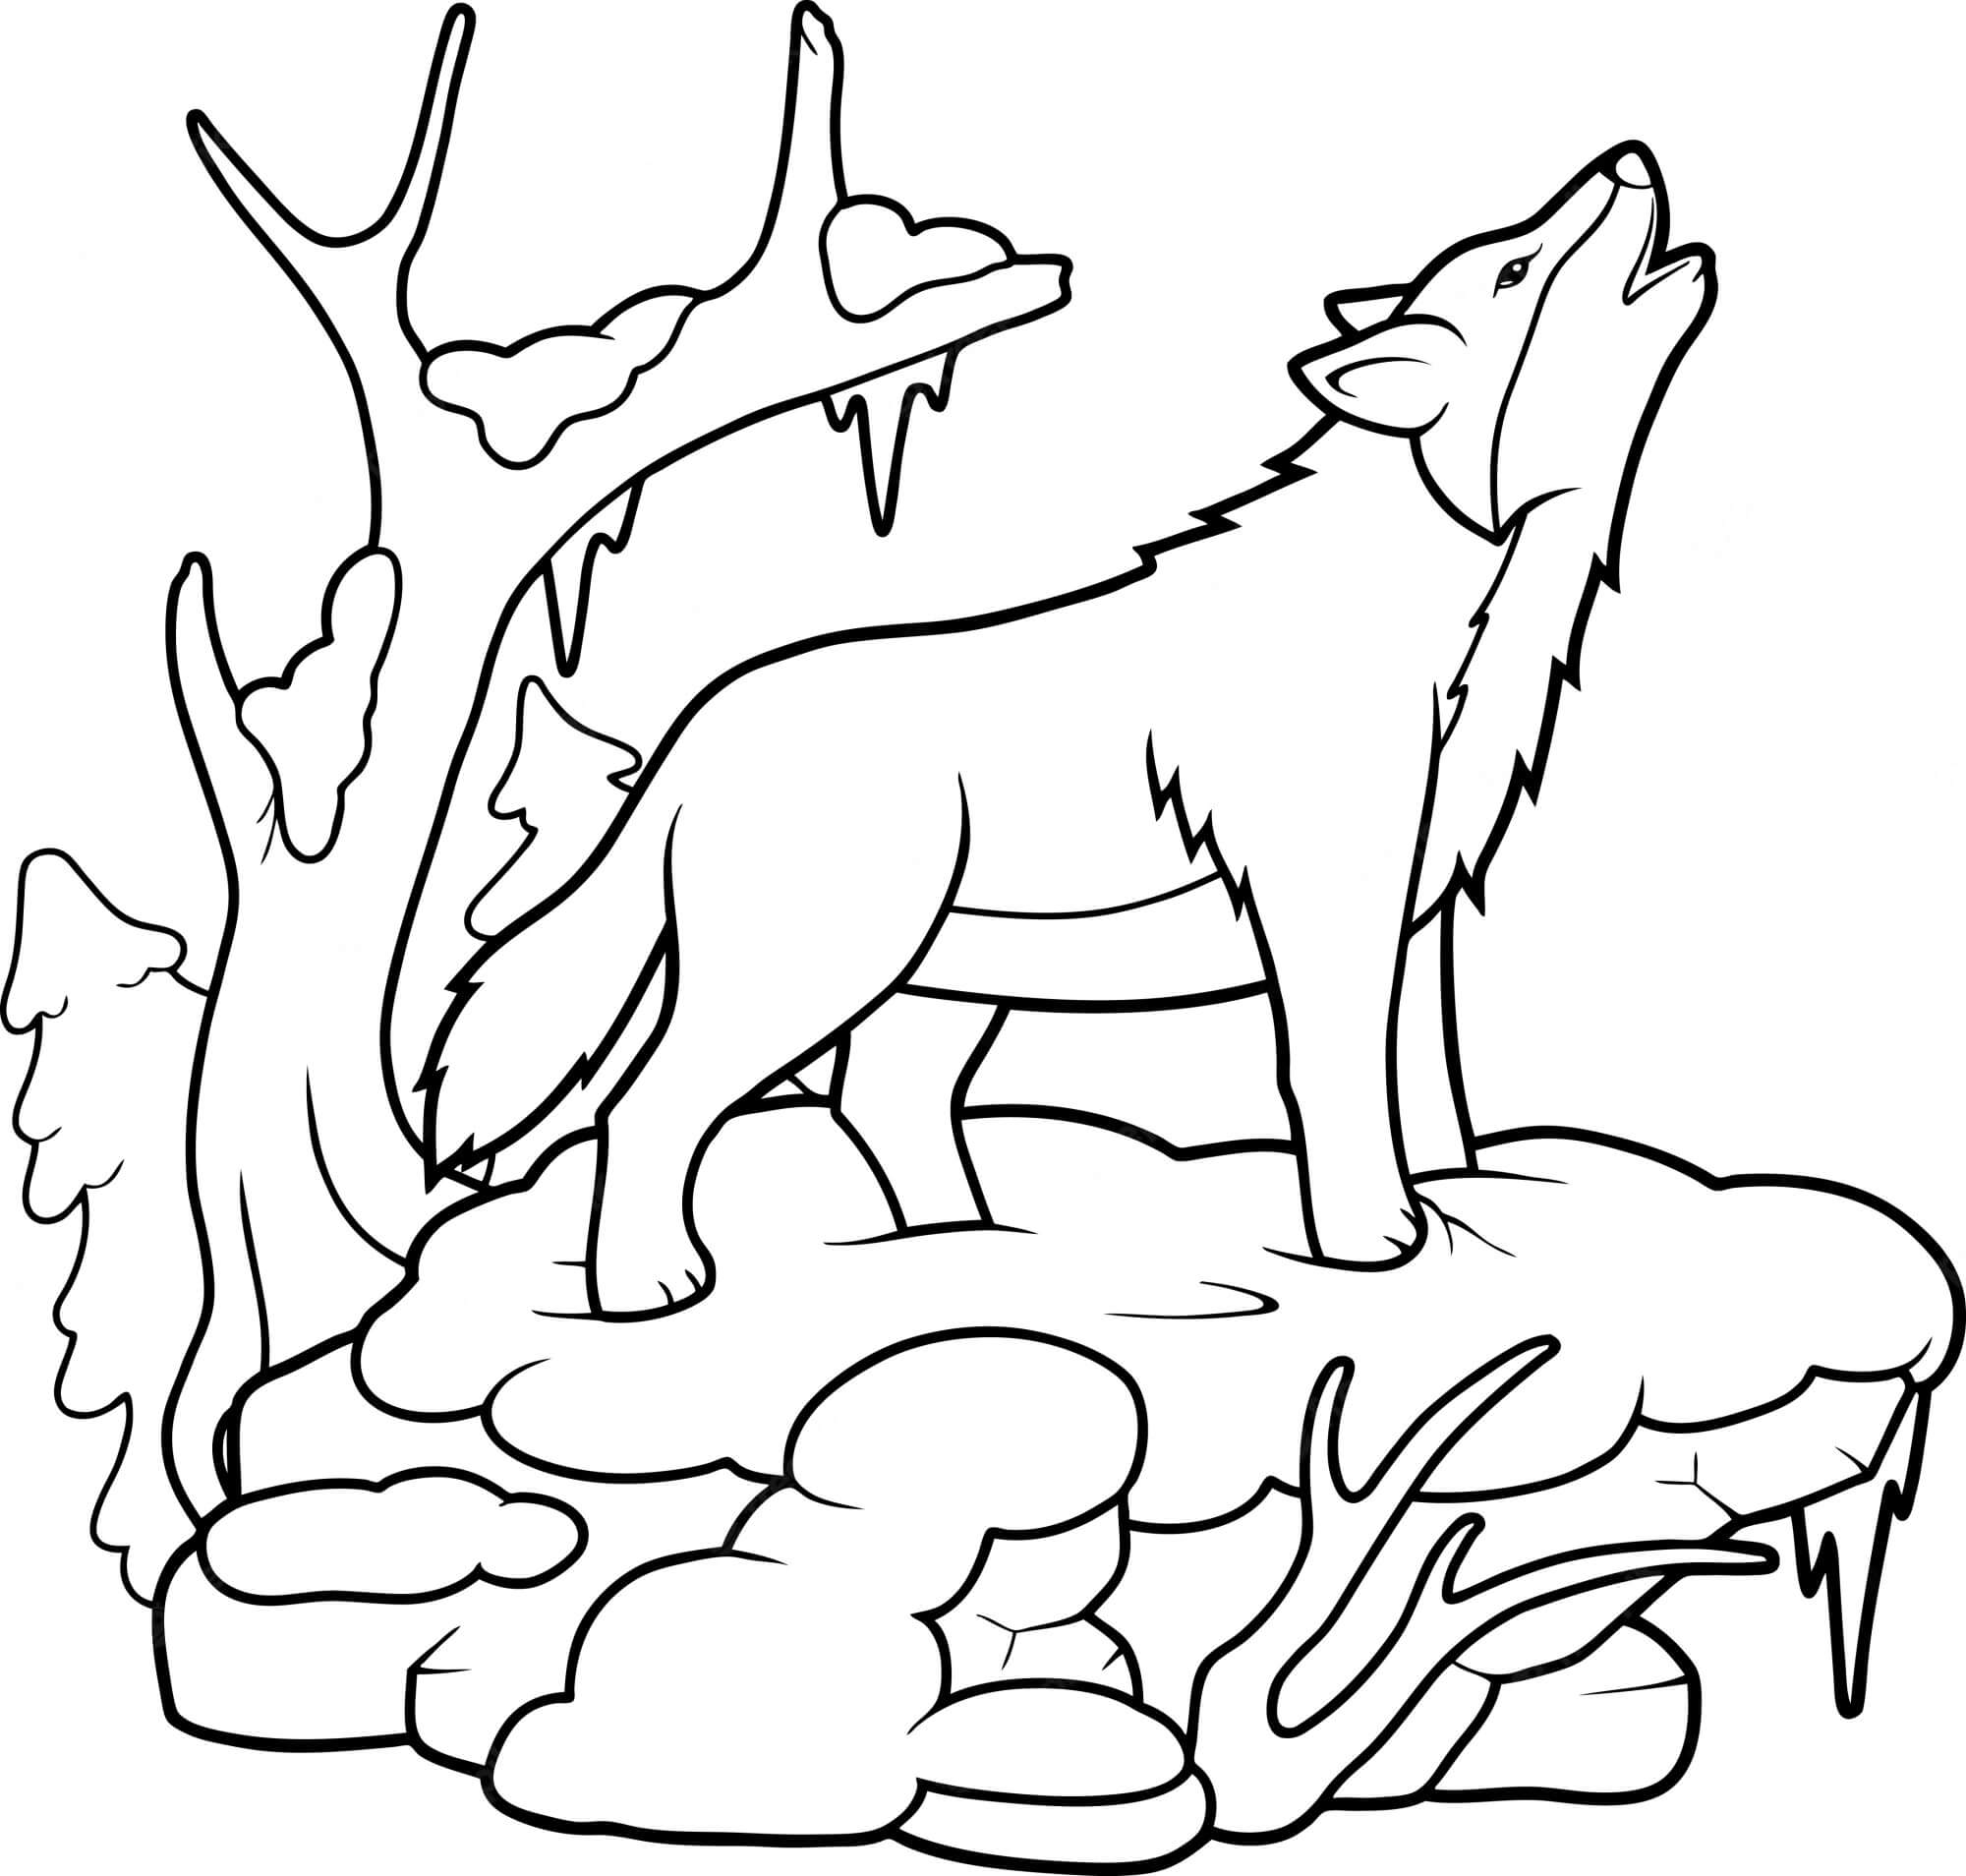 Lobo de Desenho Animado Uivando para colorir